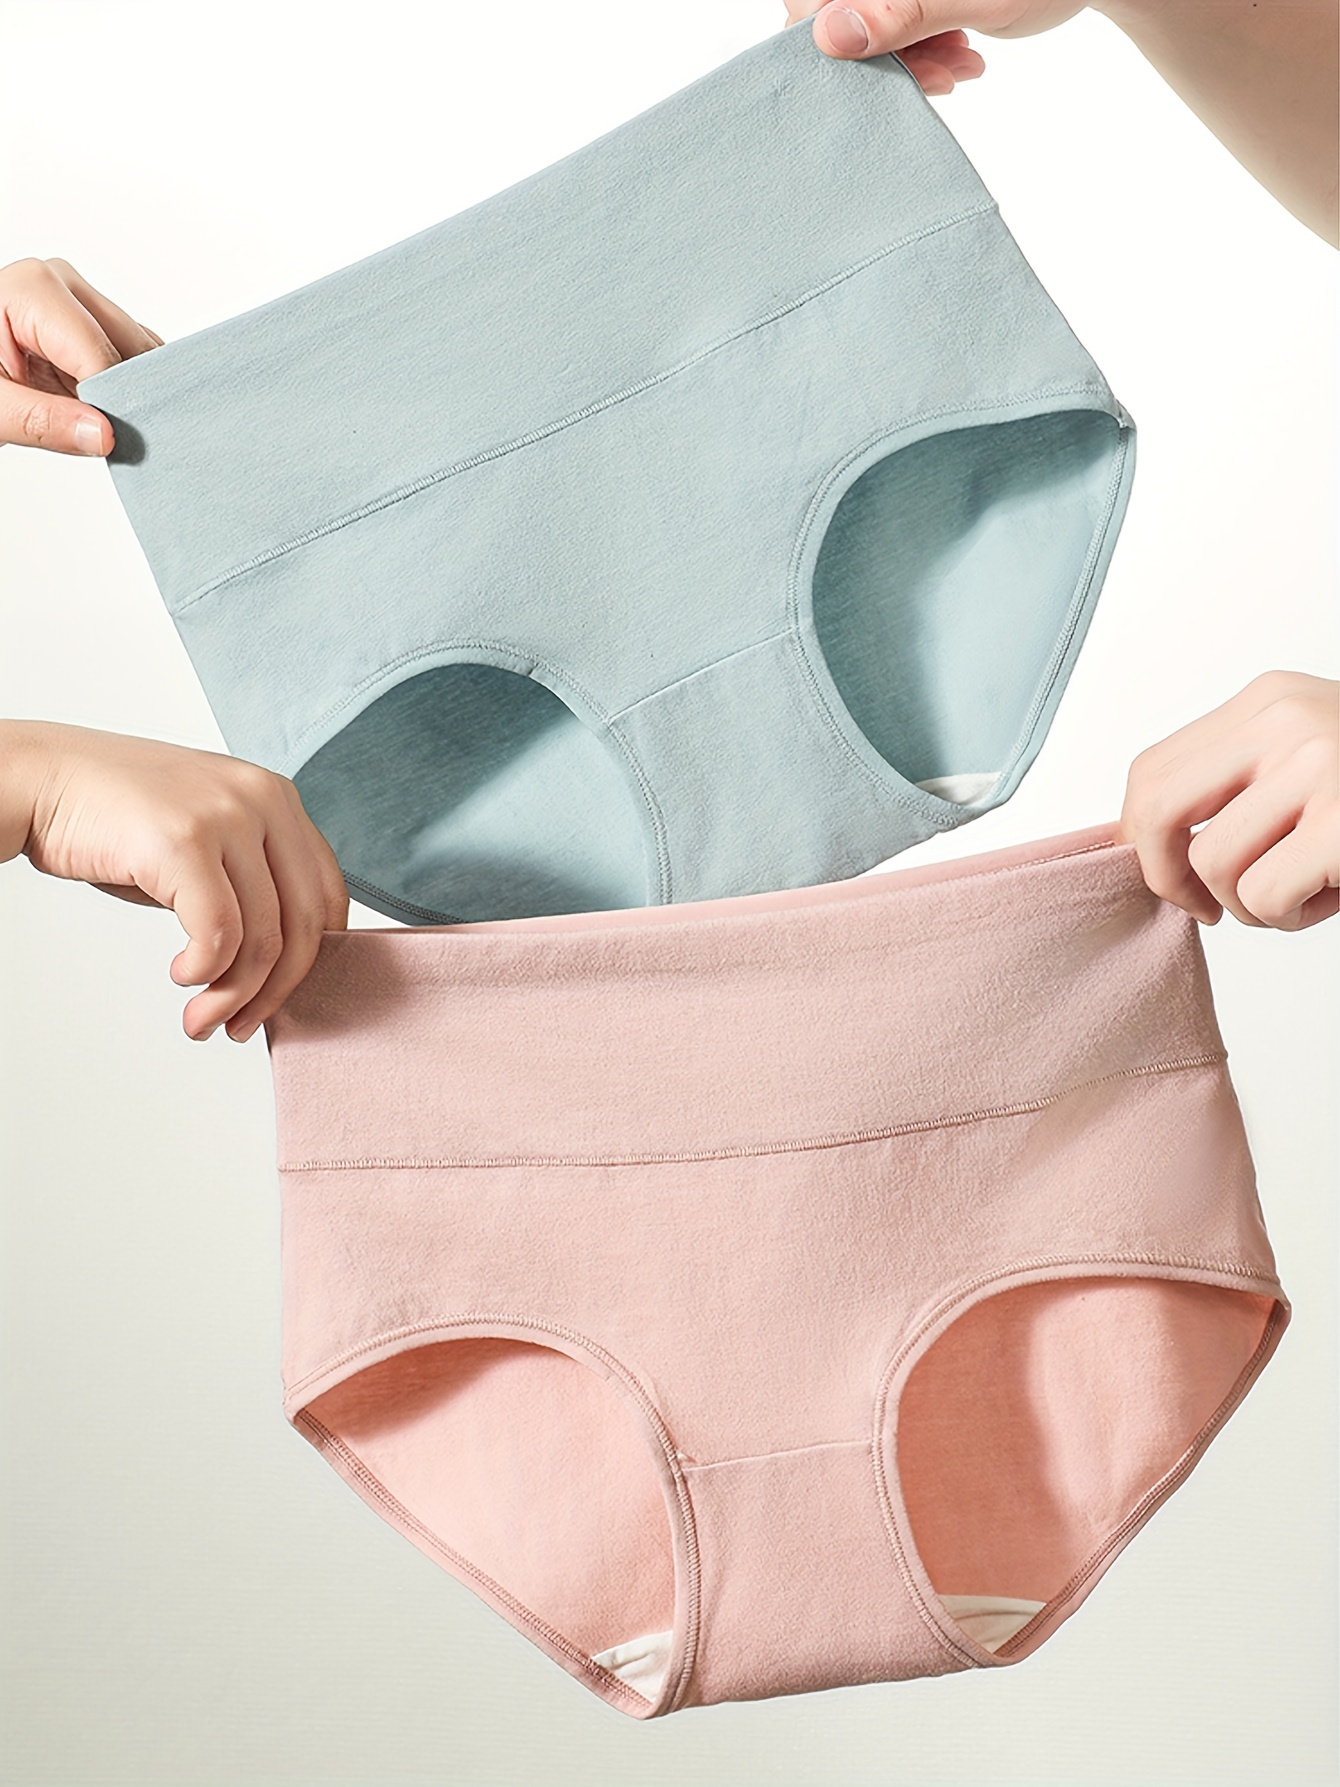 Women's High Waisted Cotton Underwear, Ladies Soft Full Briefs Panties